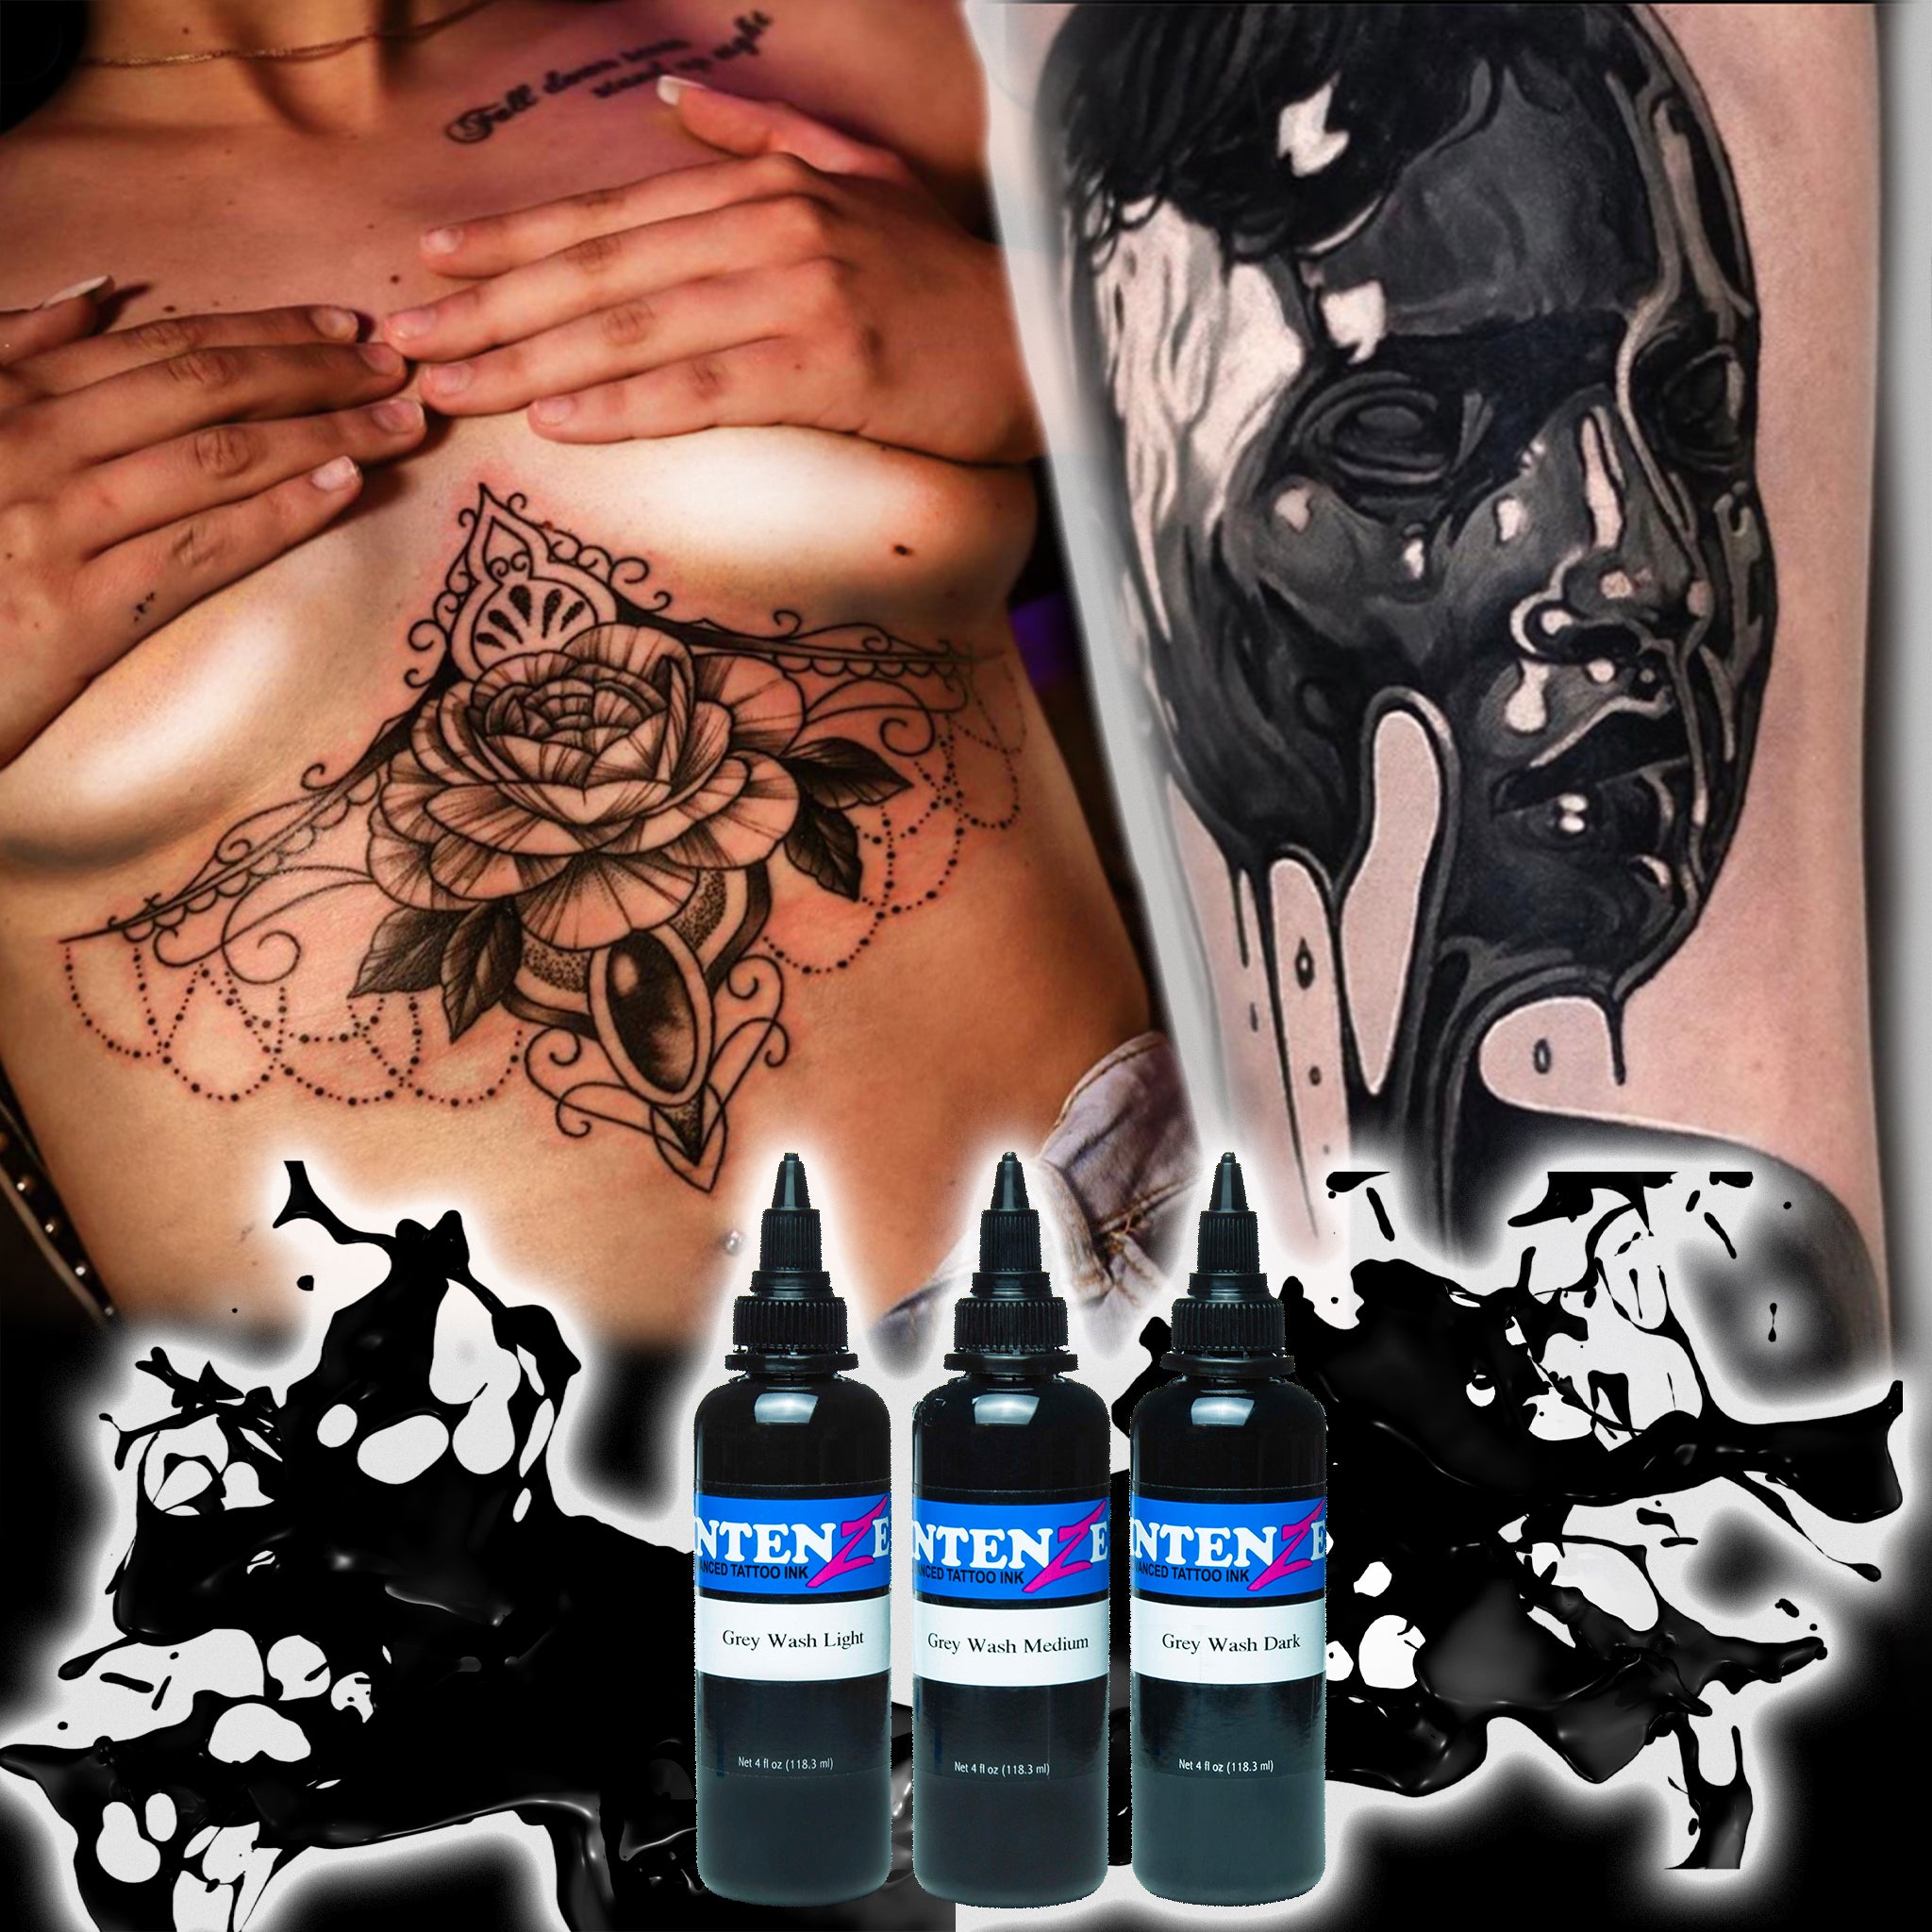 extreme tattoo | Old Harley Davidson rider tattoo | Extreme Tattoo | Flickr